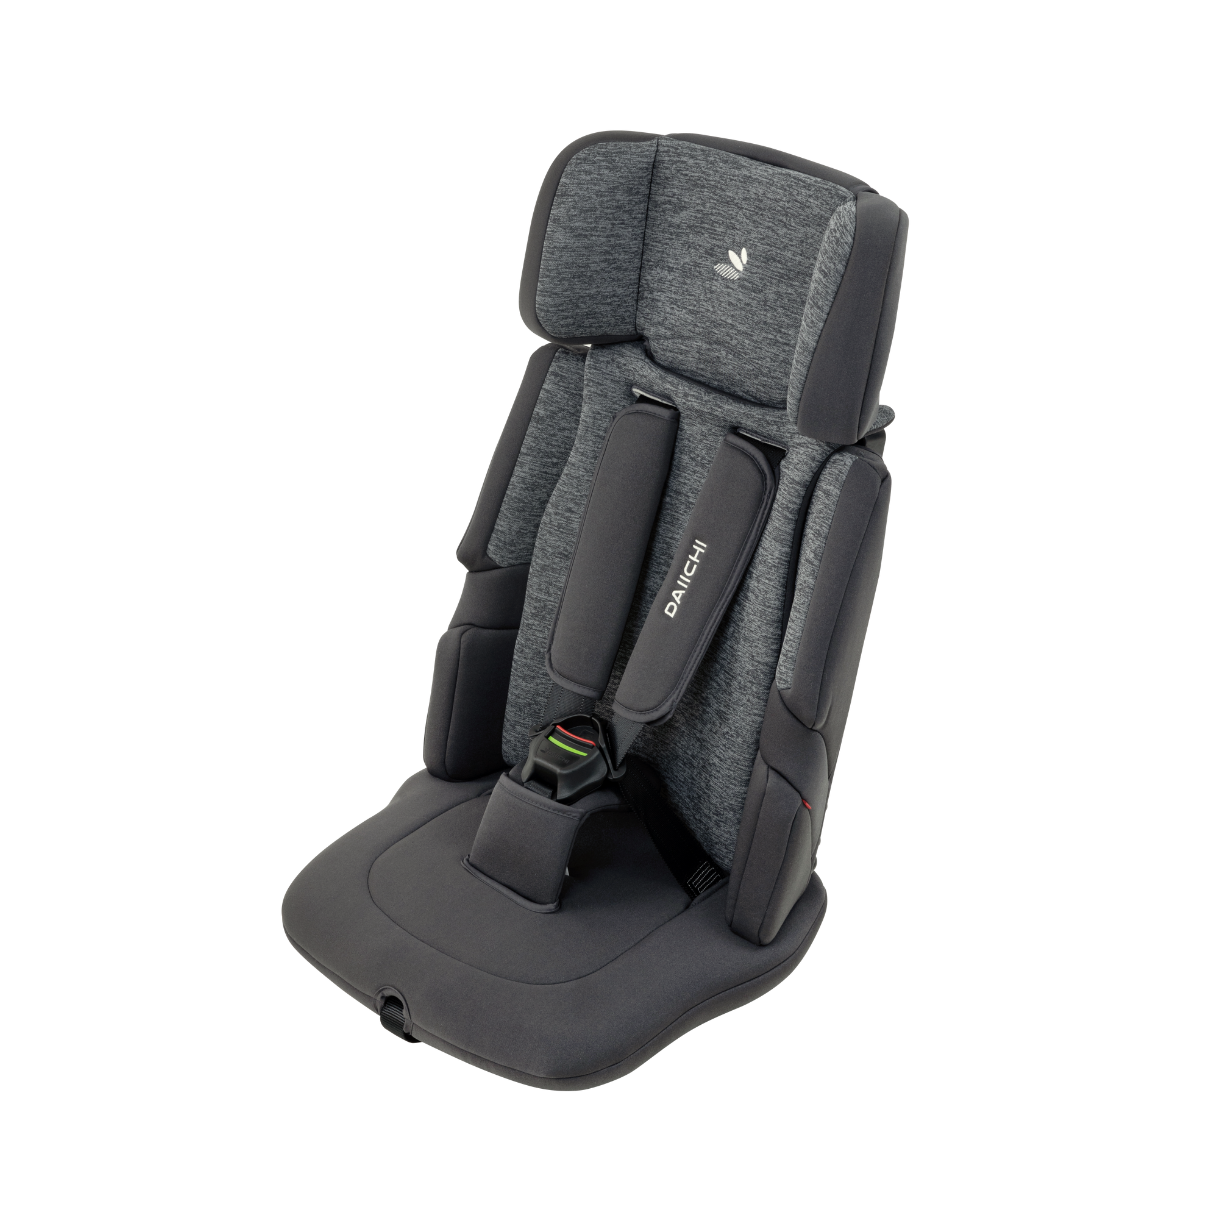 Daiichi Easy Carry 2 Portable Car Seat - Charcoal  [Pre-order ETA early July 2024]